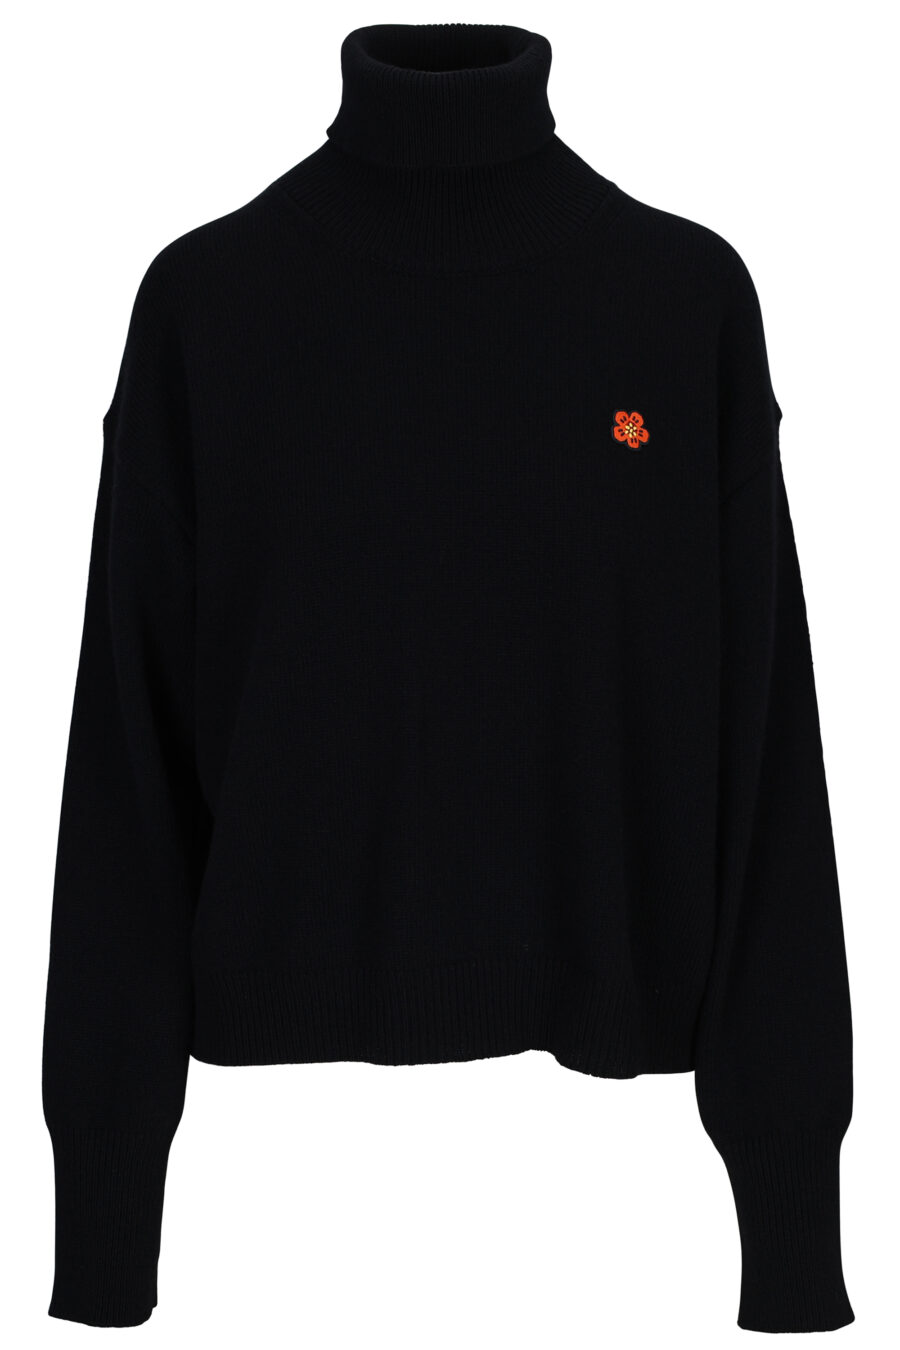 Black jumper with mini-logo - 3612230530416